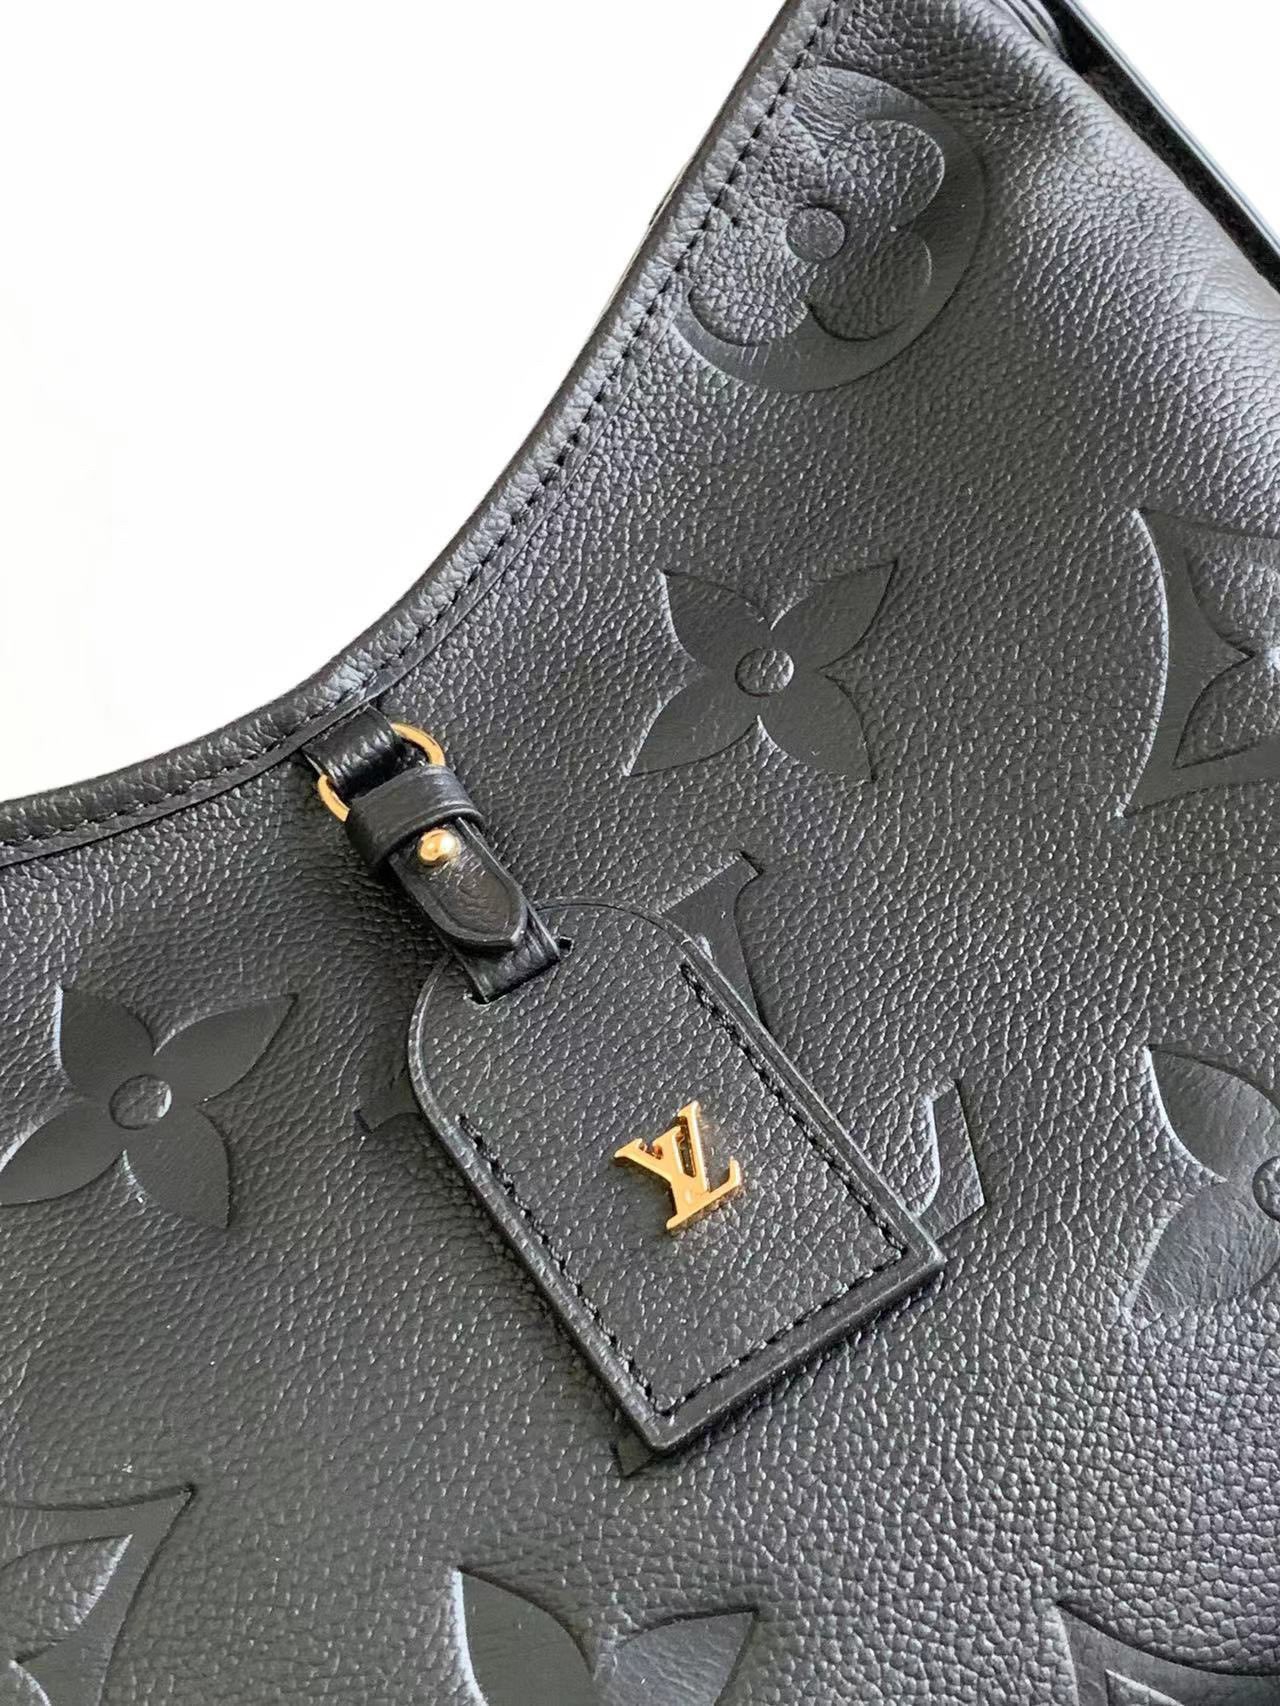 Louis Vuitton Carryall PM Black Monogram Empreinte